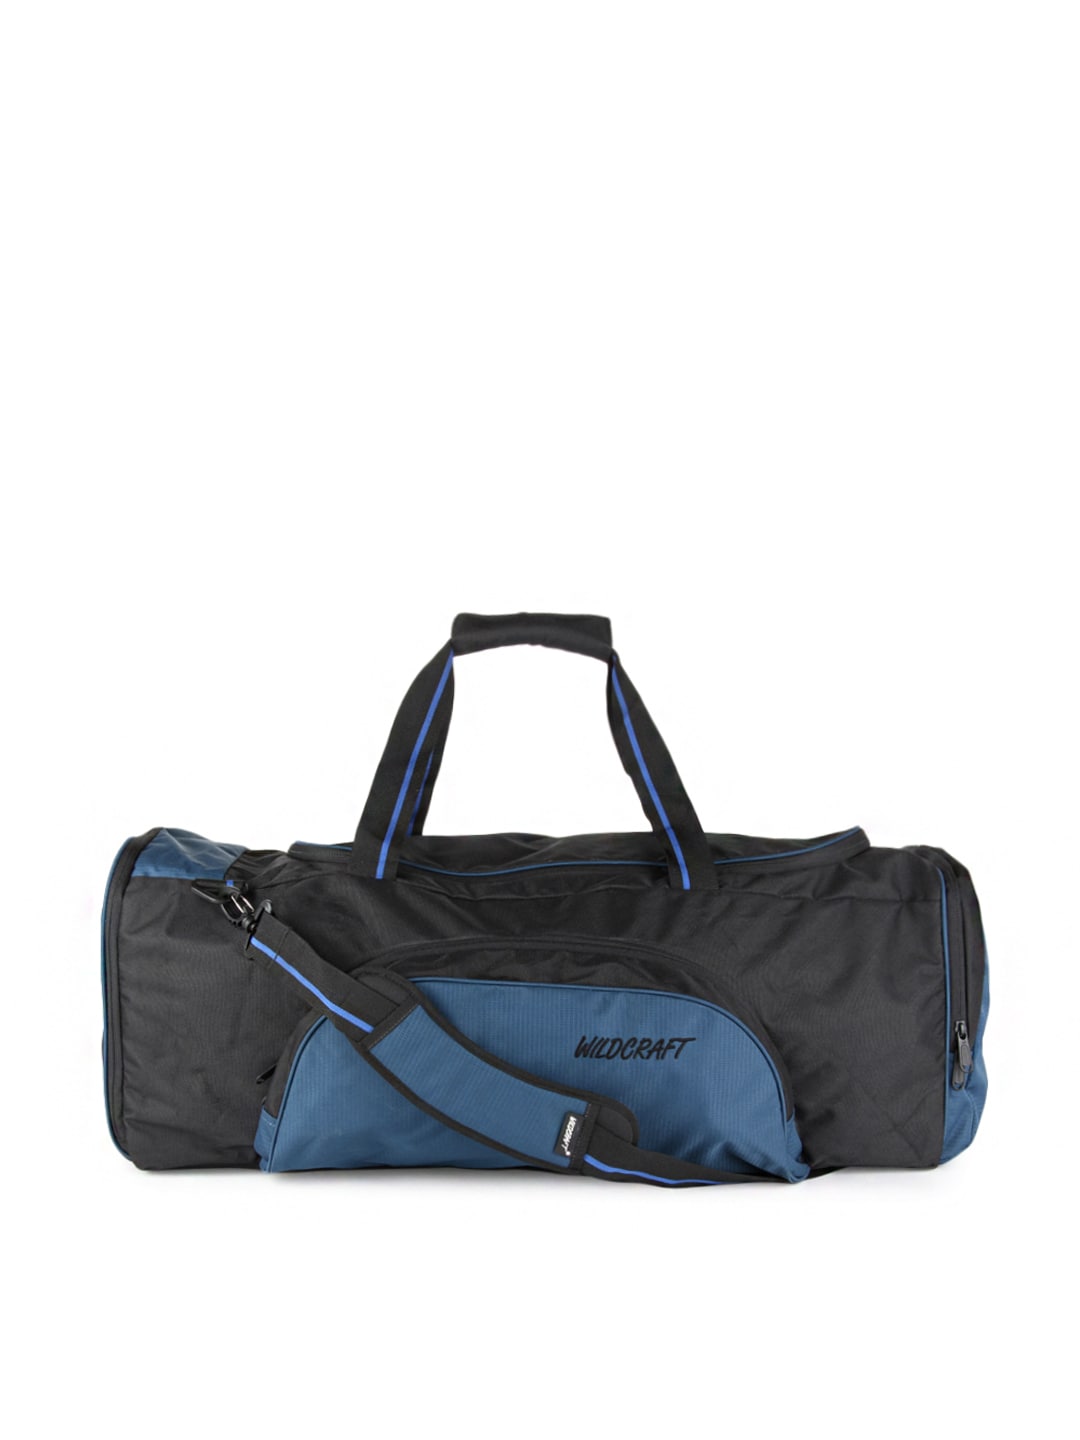 Wildcraft Unisex Black & Blue Duffel Bag